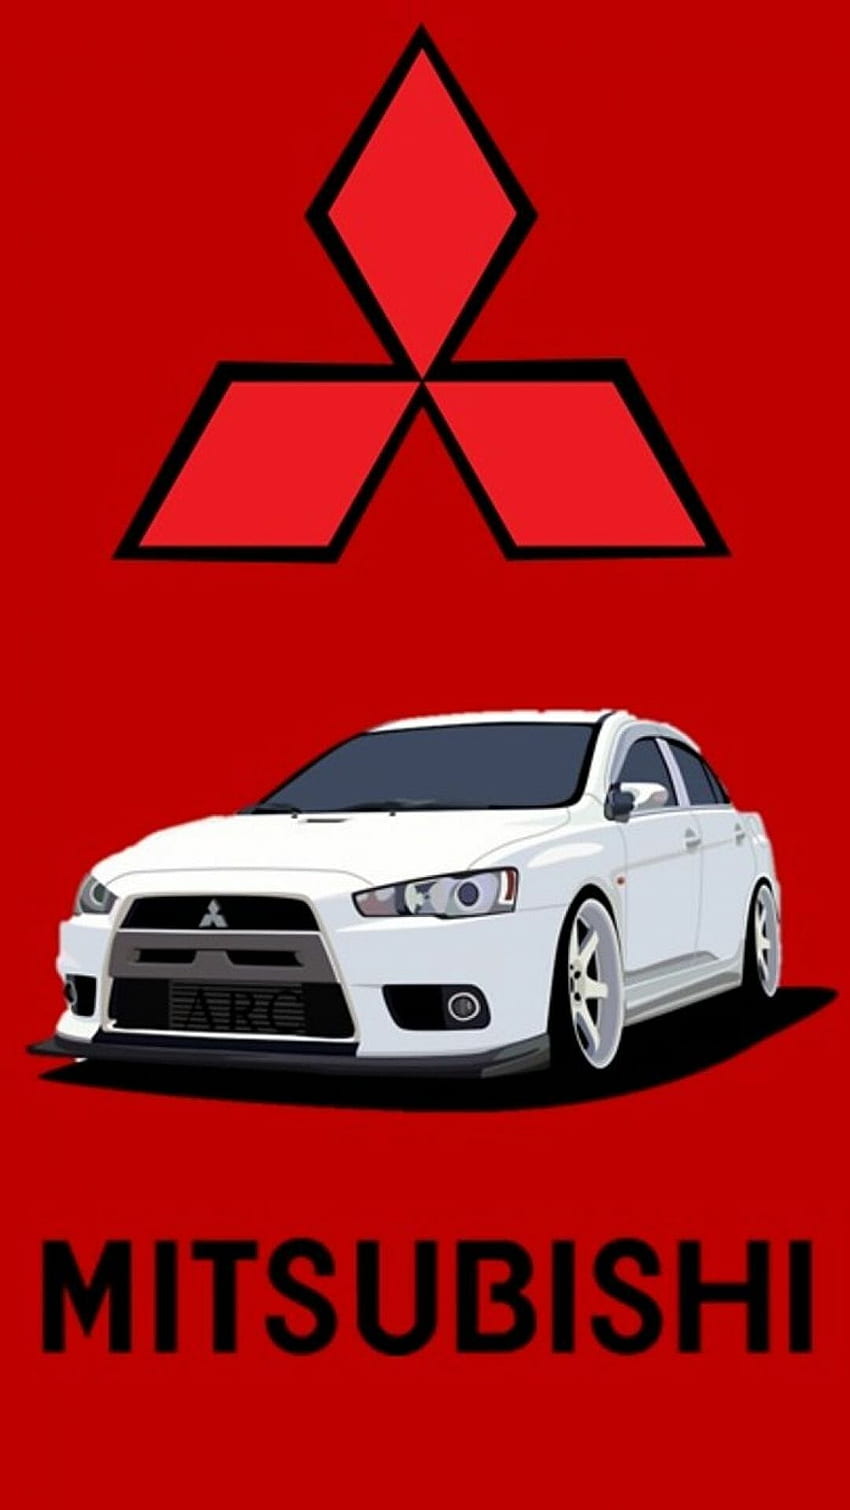 85 Mitsubishi Evo X - Android / iPhone Background (png / jpg) (2022), ランサー EX HD電話の壁紙